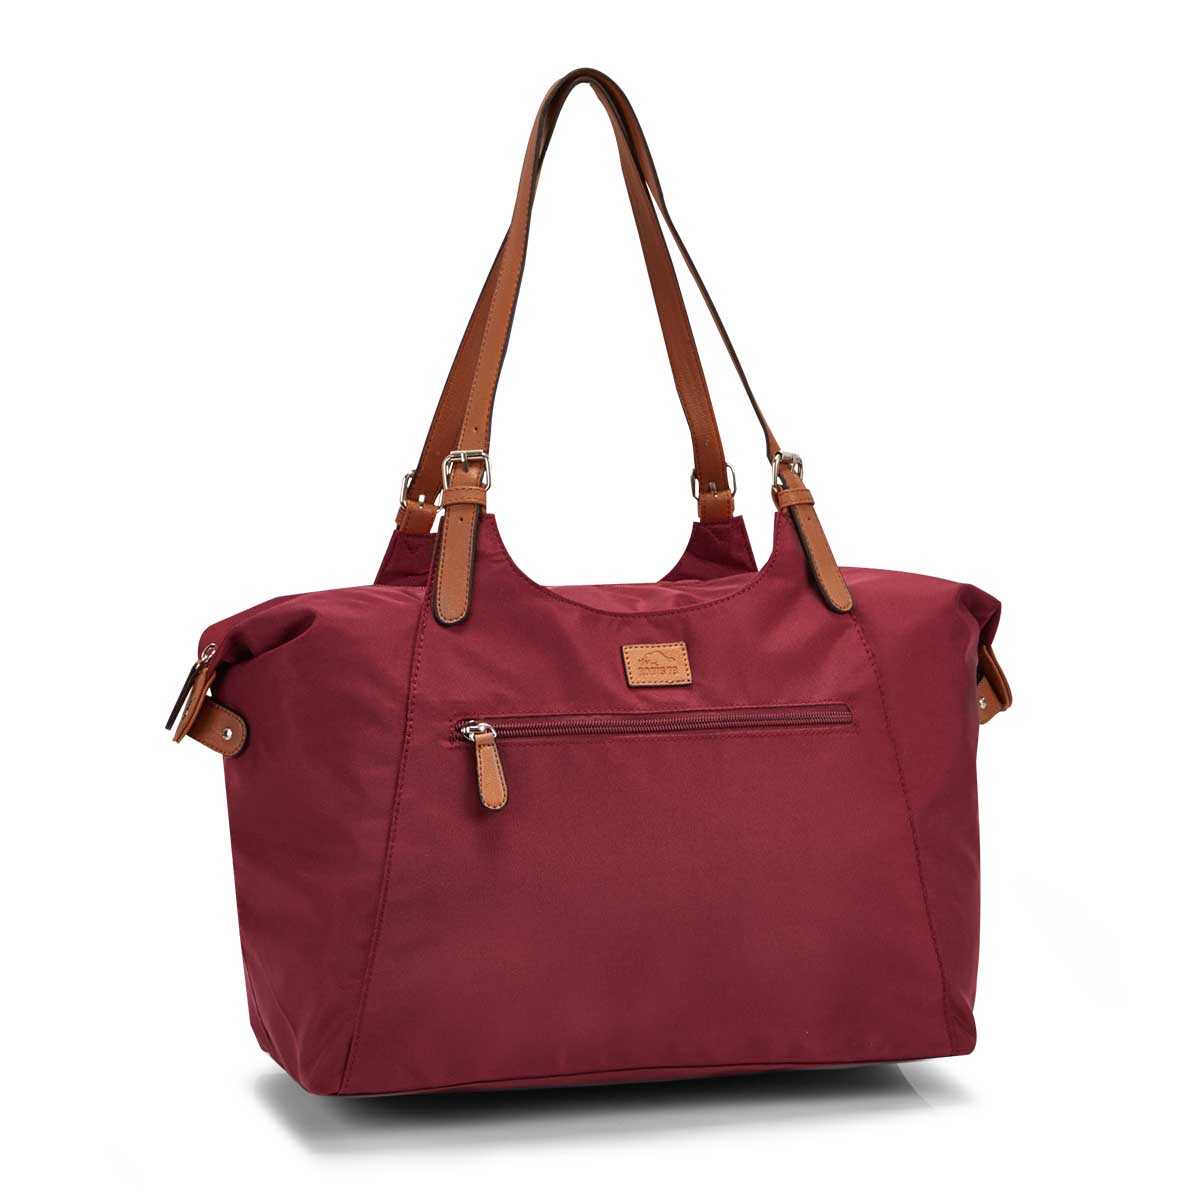 Women's R4700 burgundy large tote bag